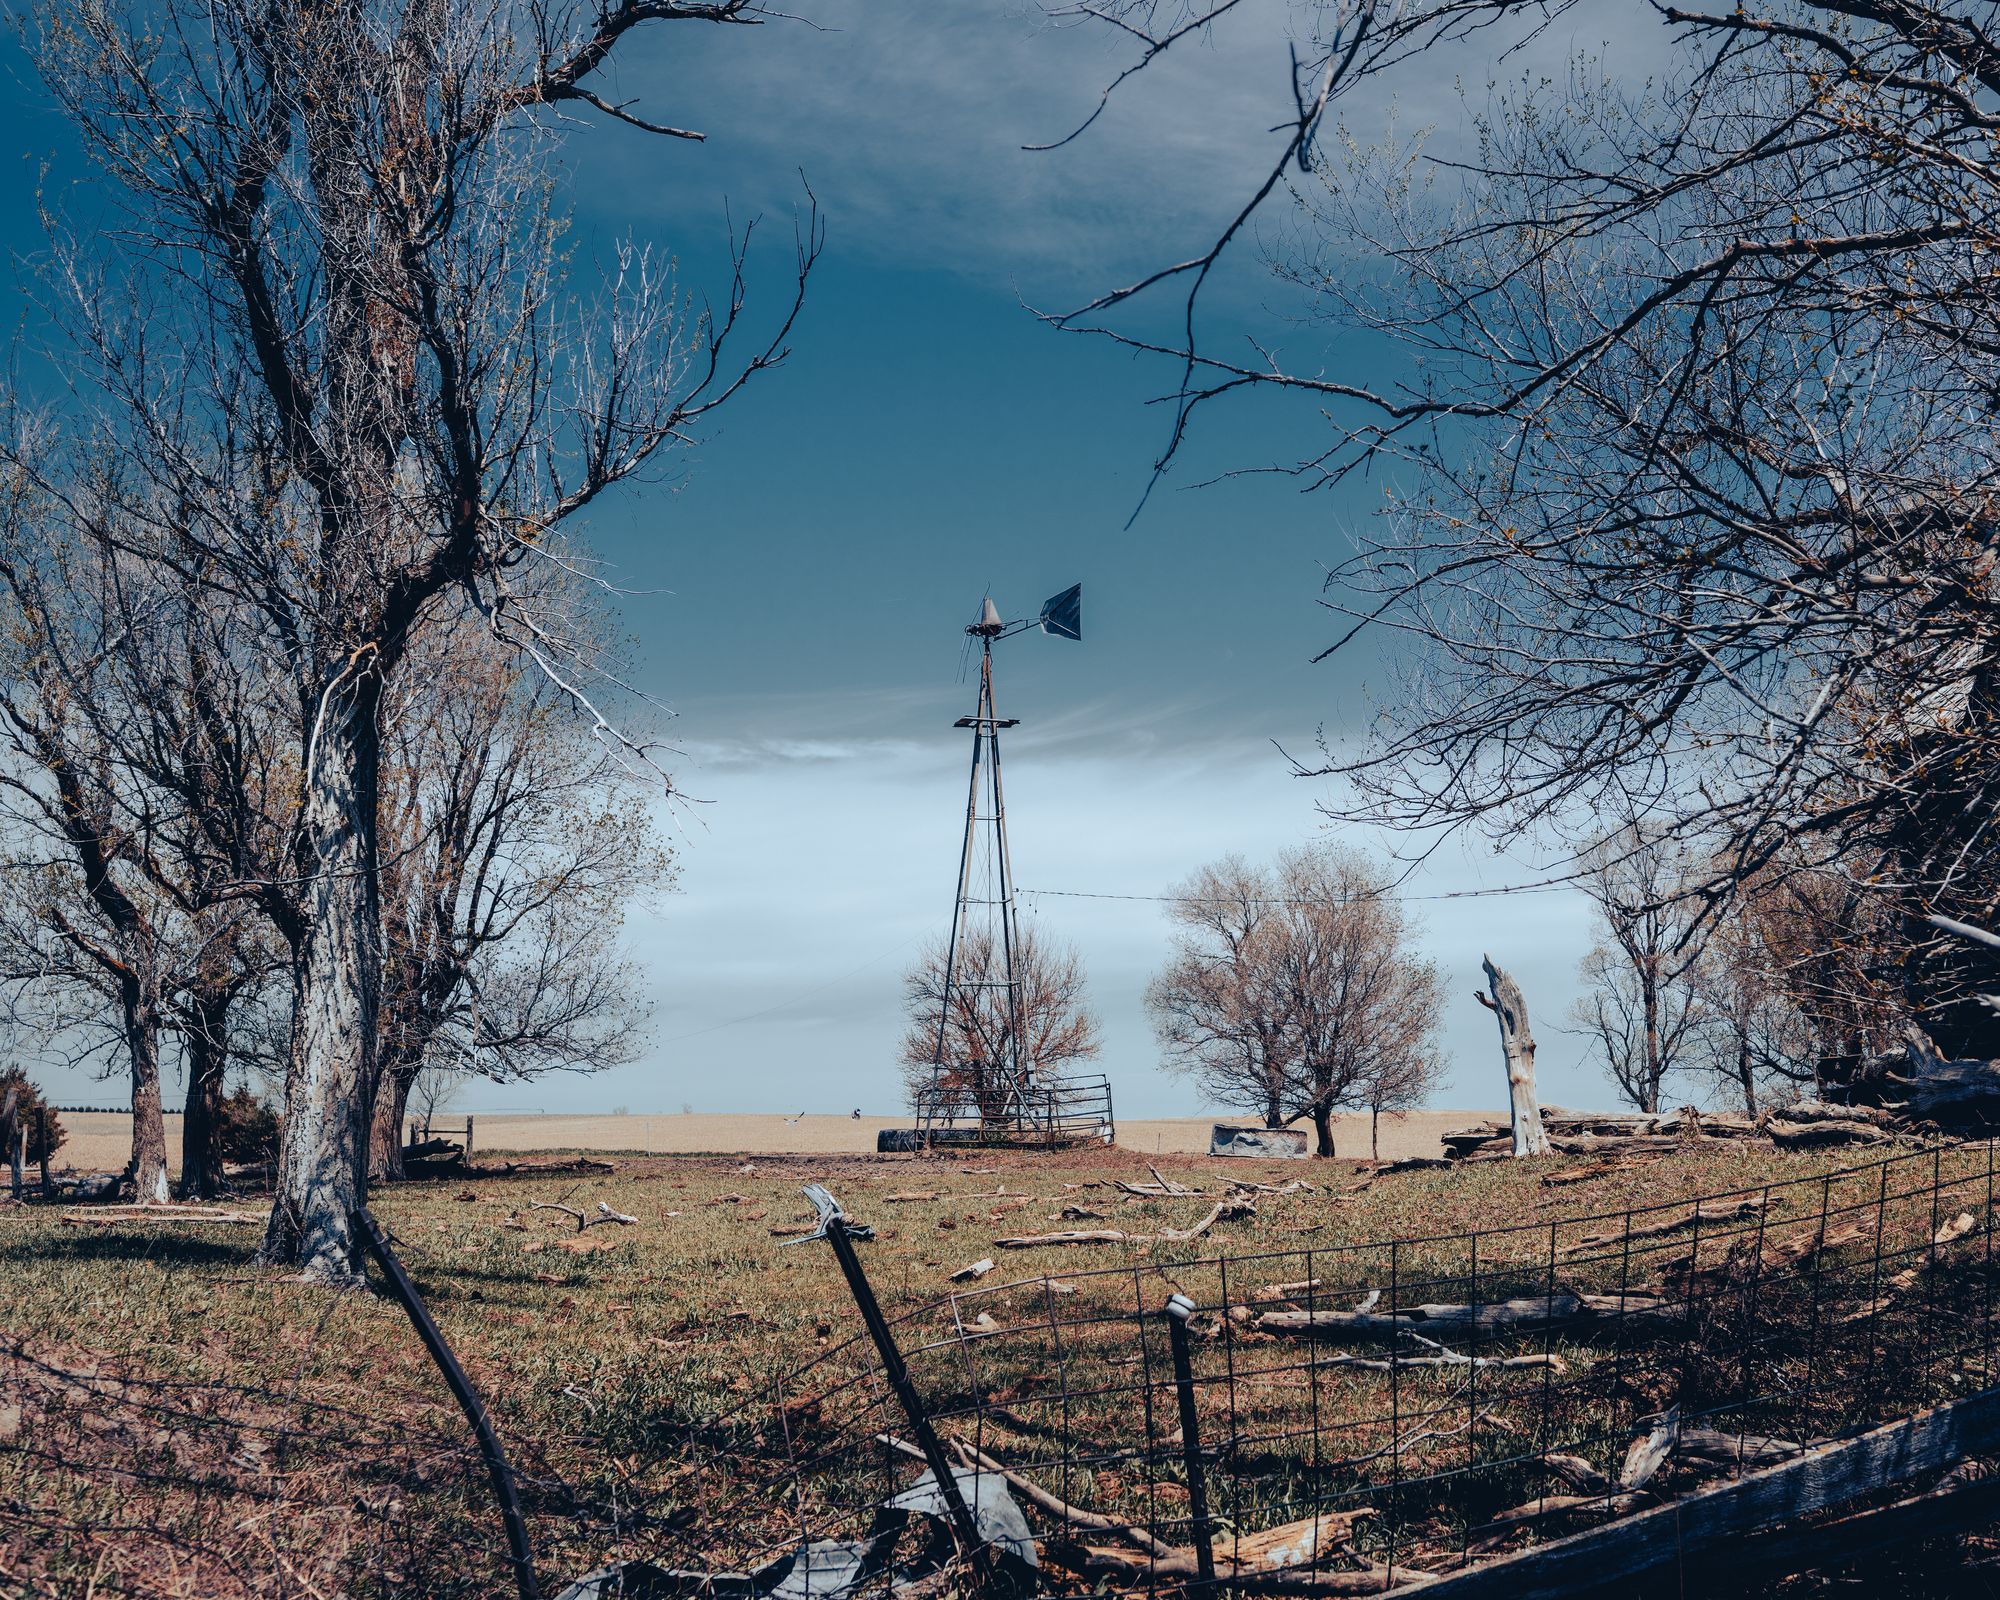 The haunted homesteads of Nebraska's prairie